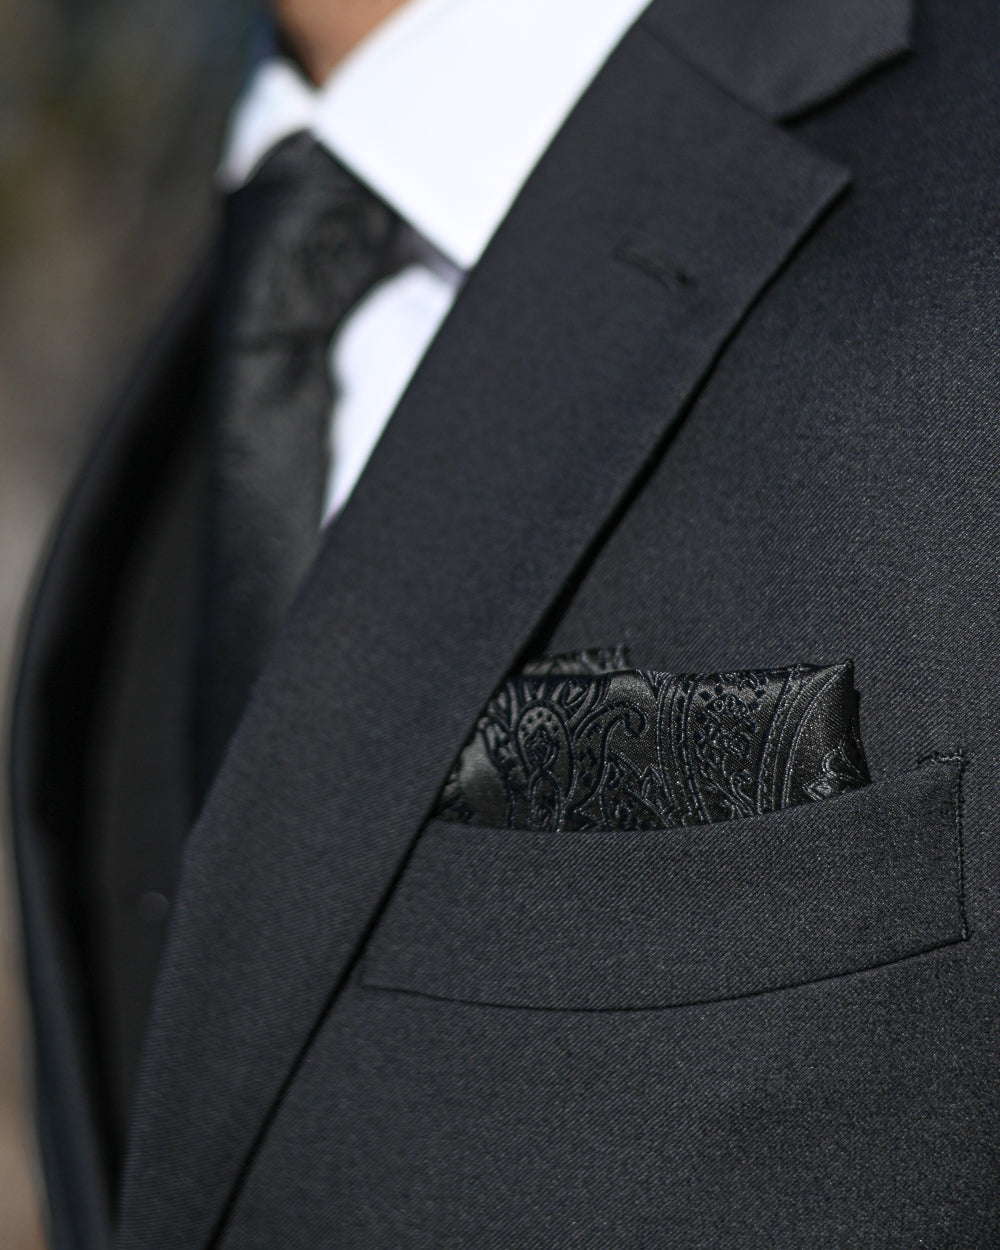 Black paisley pocket square worn with black suit